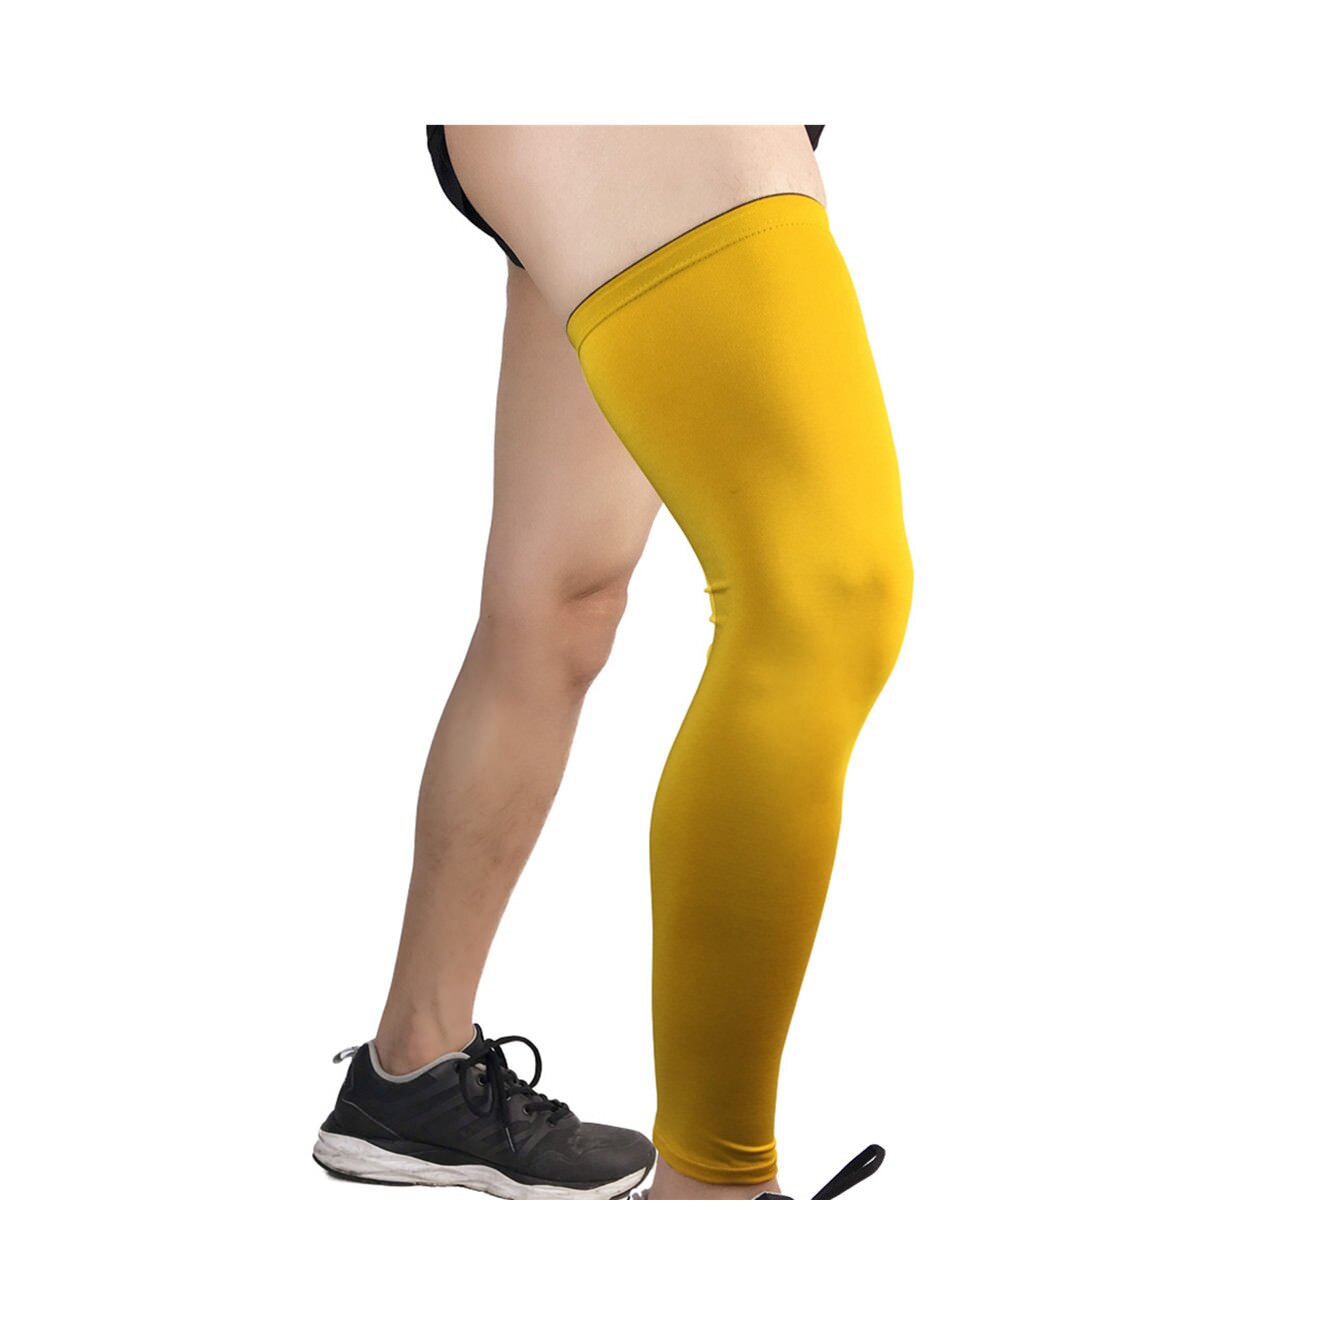 Compression Knee Calf Sleeves Leg Guard Support Antislip Yellow Xxl